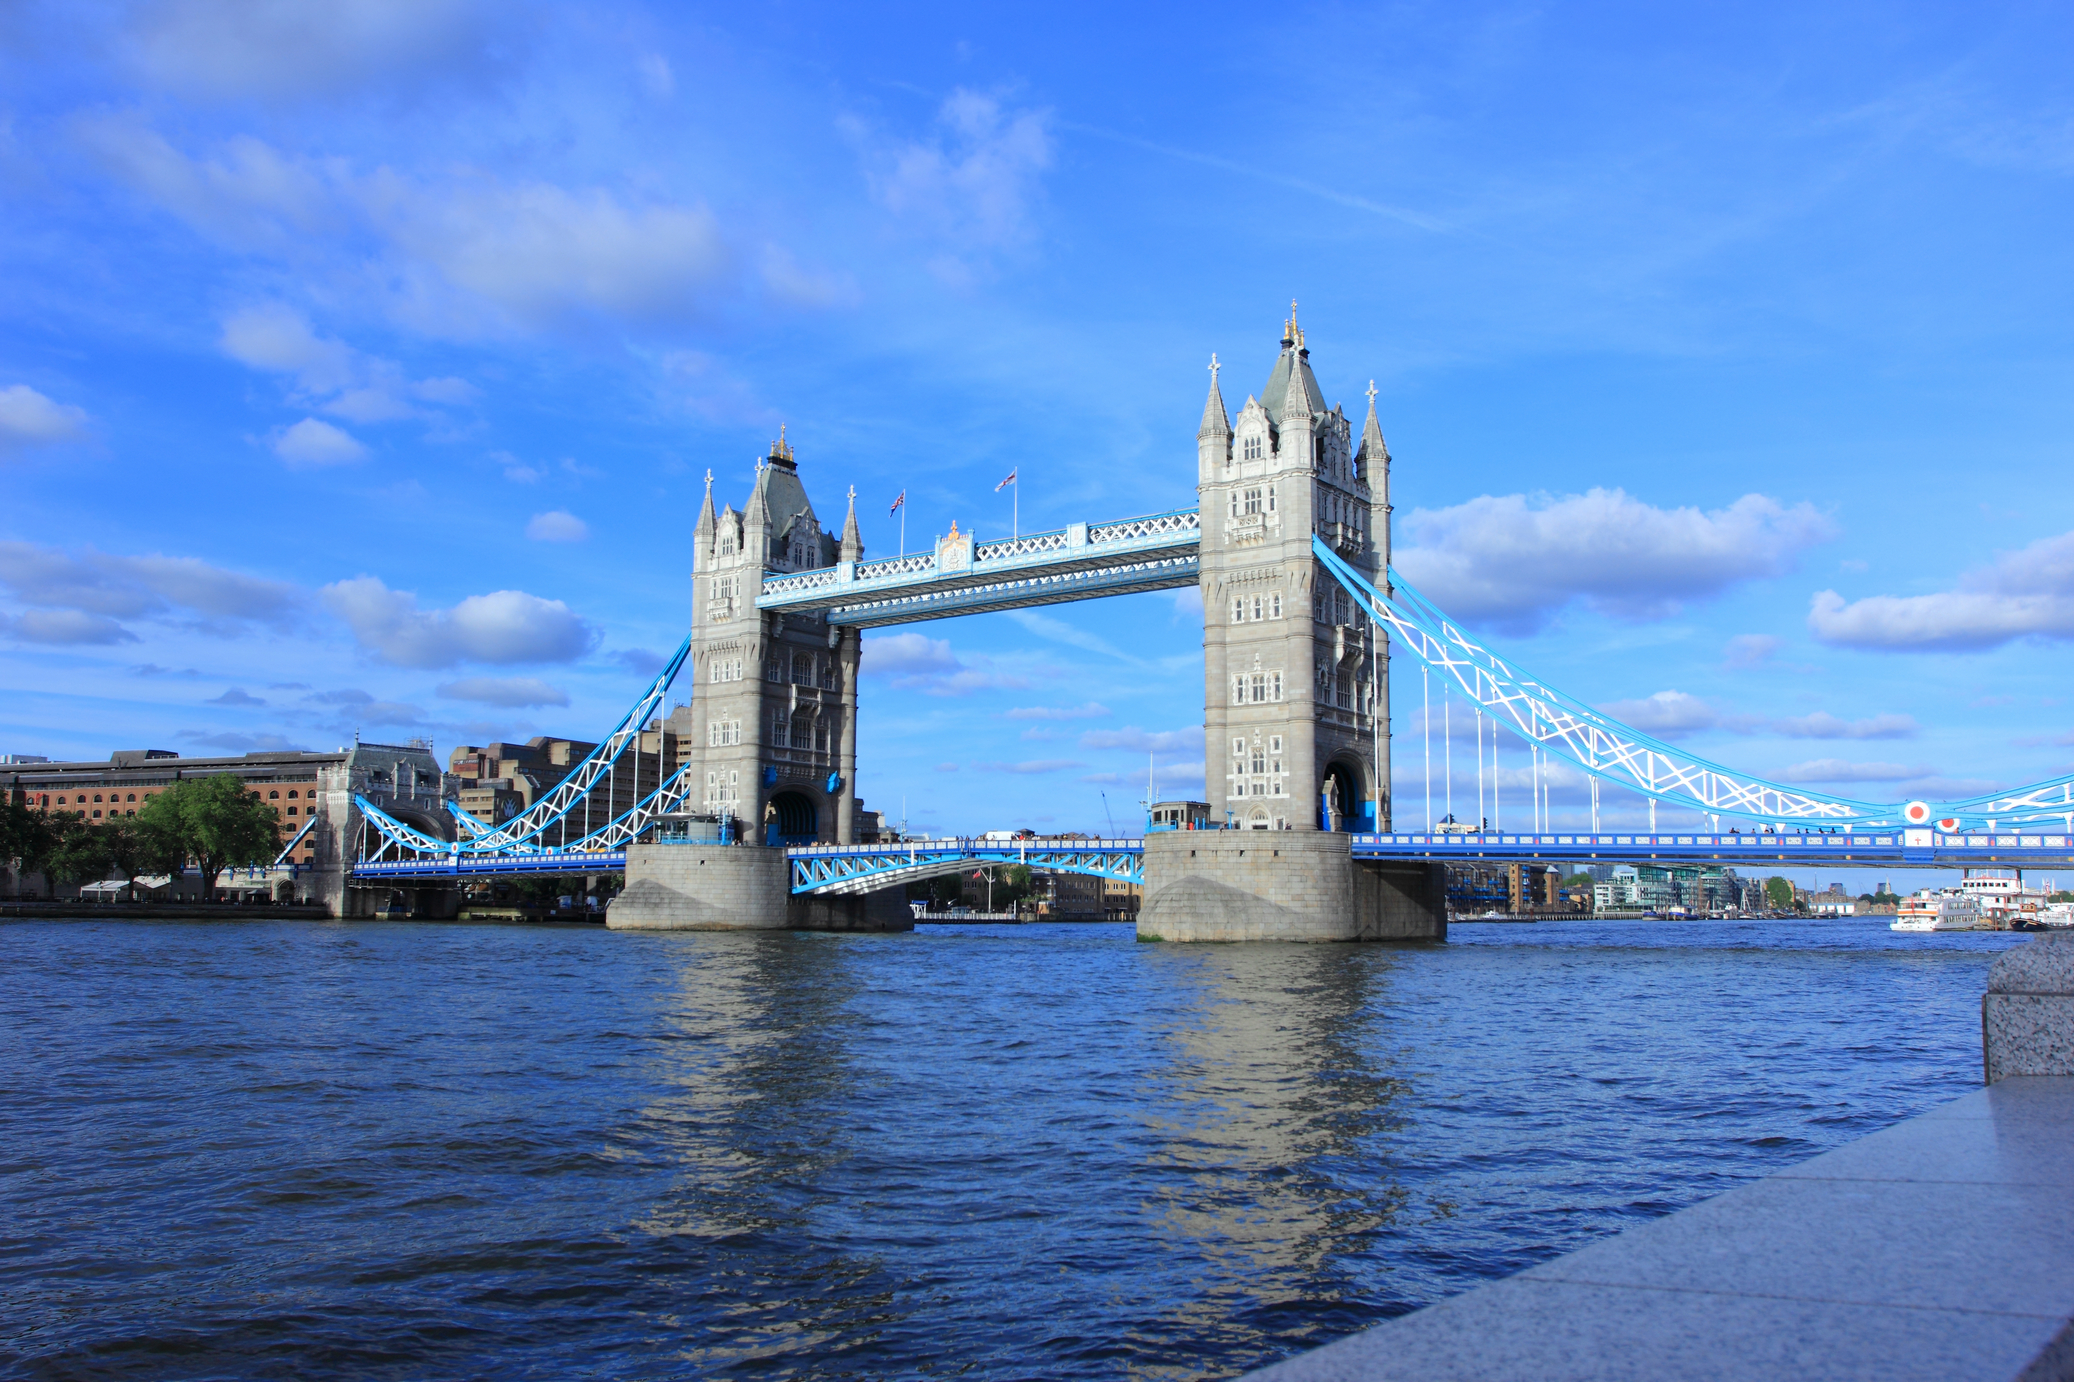 伦敦塔桥-伦敦塔桥 (© Mapics/Getty Images) @20160726 | NiceBing 必应美图 - 精彩世界,一触即发